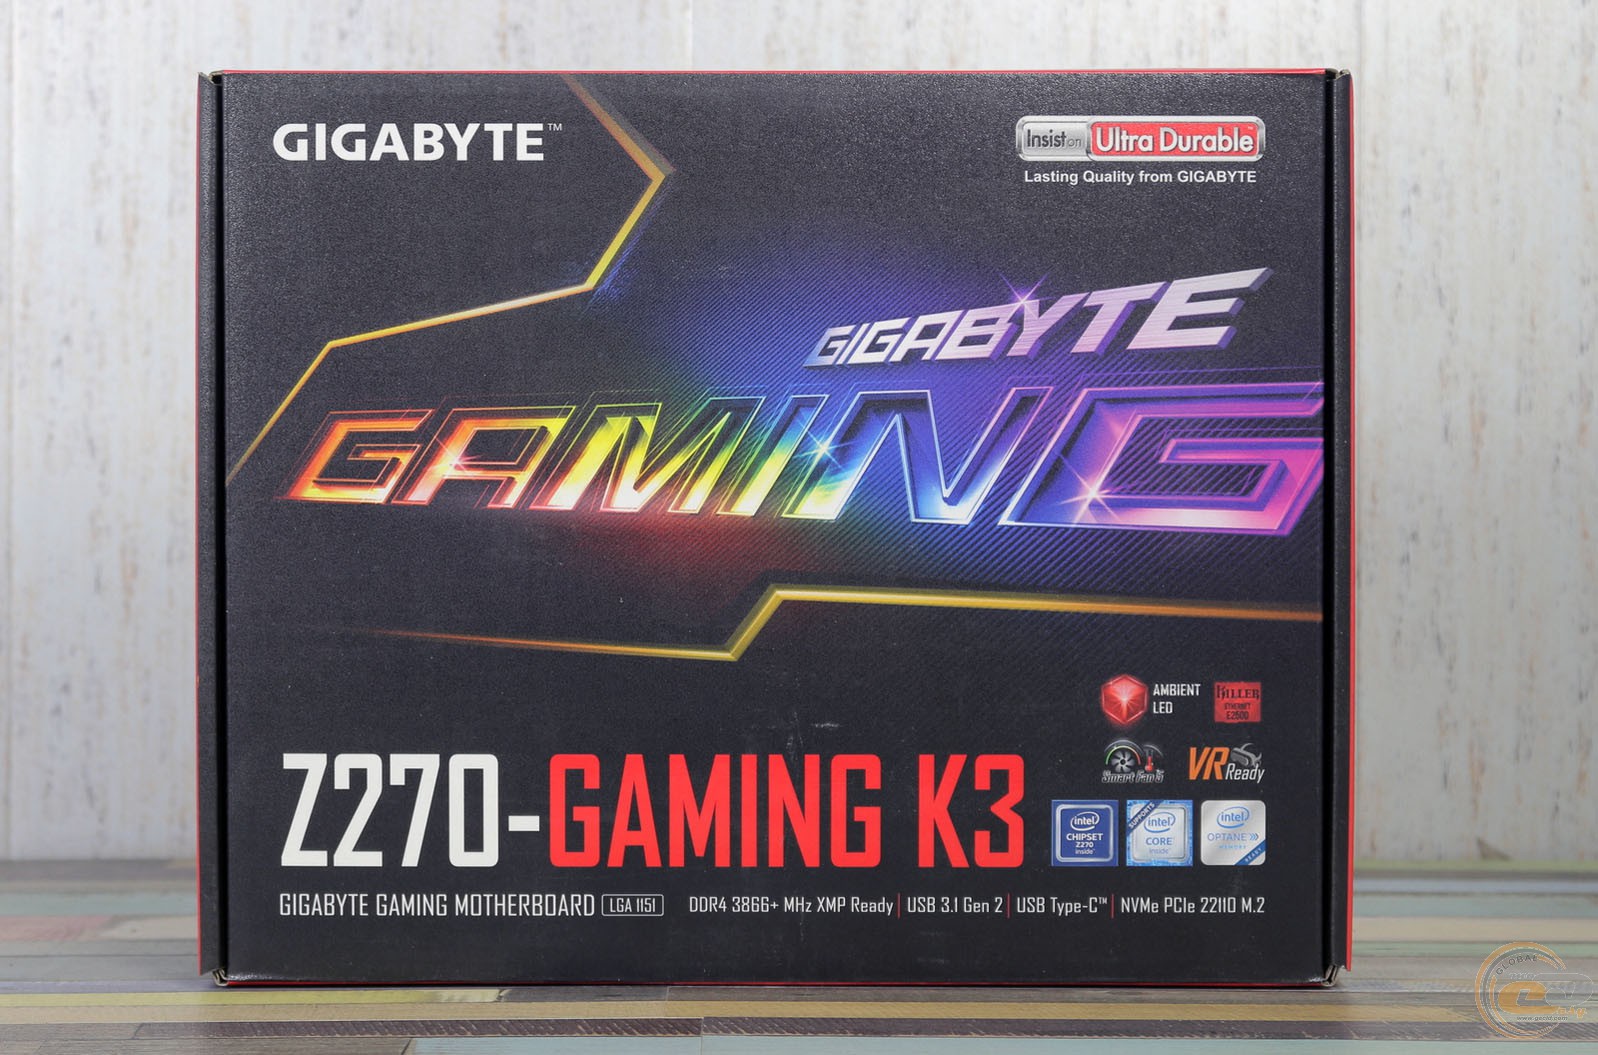 Gigabyte gaming k3. Gigabyte z270 Gaming k3. Gigabyte ga-z270-Gaming k3. Gigabyte Ultra durable Core 2 Dua. Gigabyte insist on Ultra durable желтый цвет BIOS.